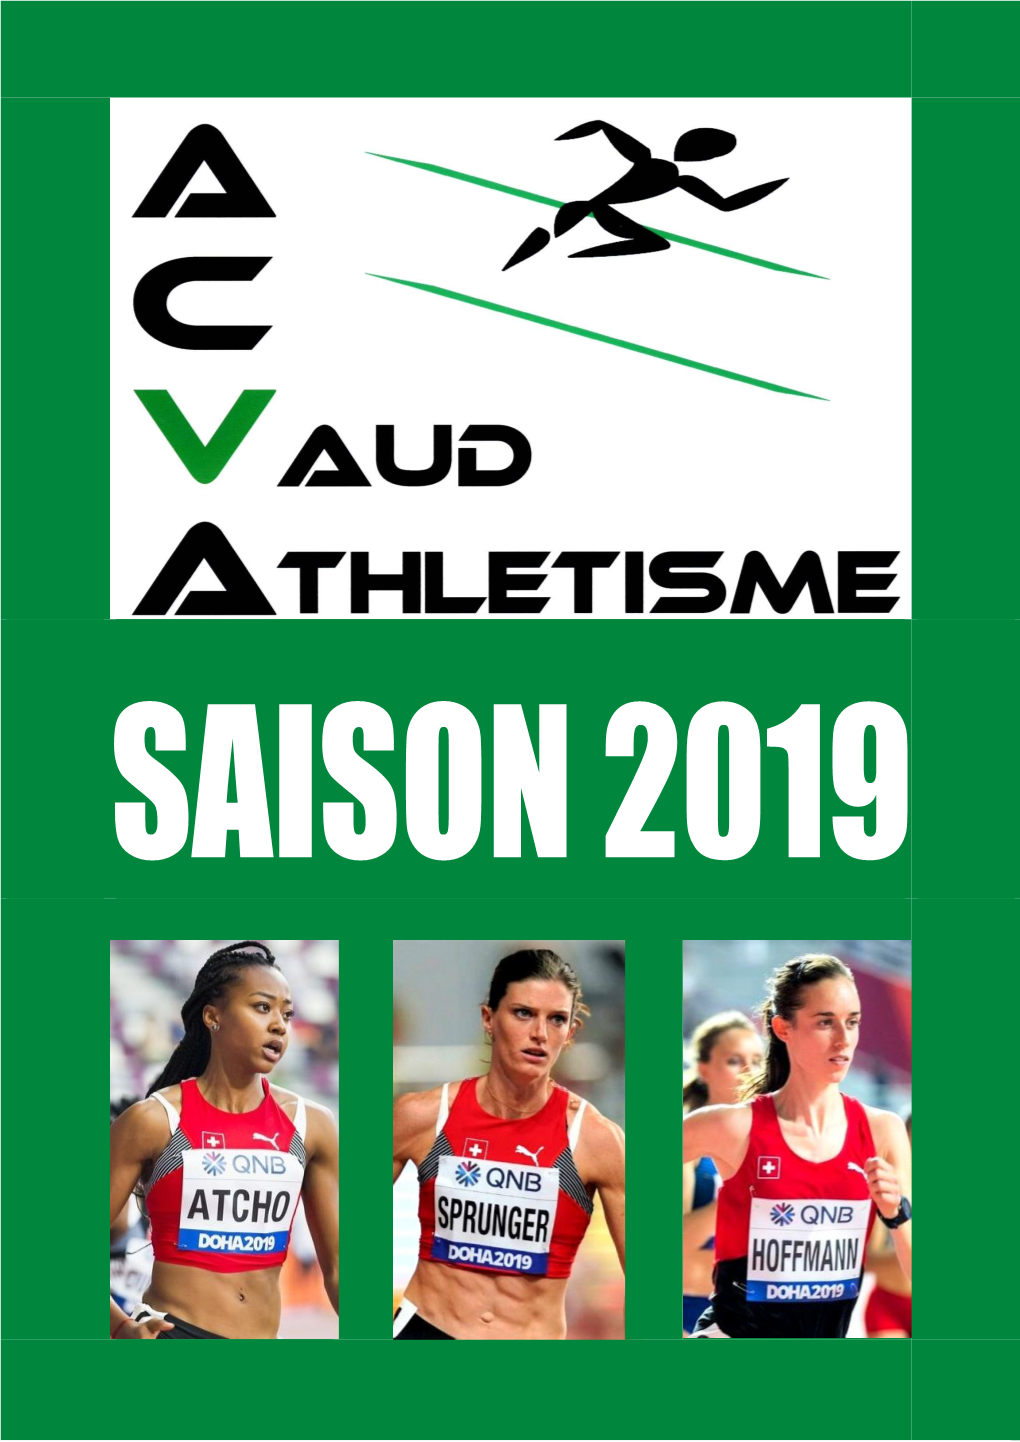 Athlétisme Vaudois Saison 2019